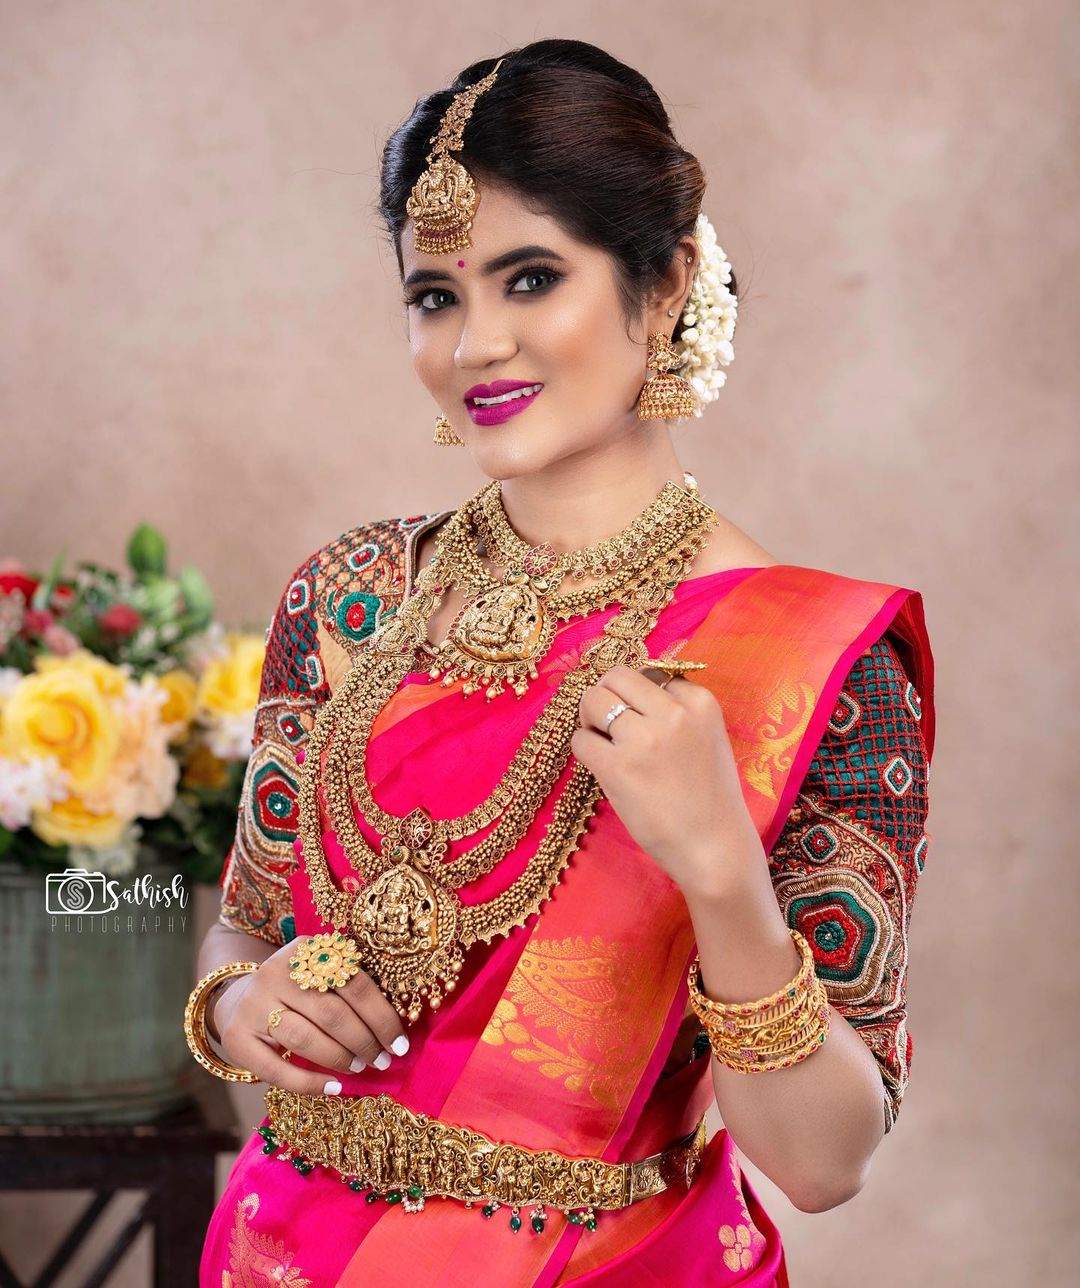 Krish makeovers | Bridal Makeup Artist in Chennai | Shaadi Baraati